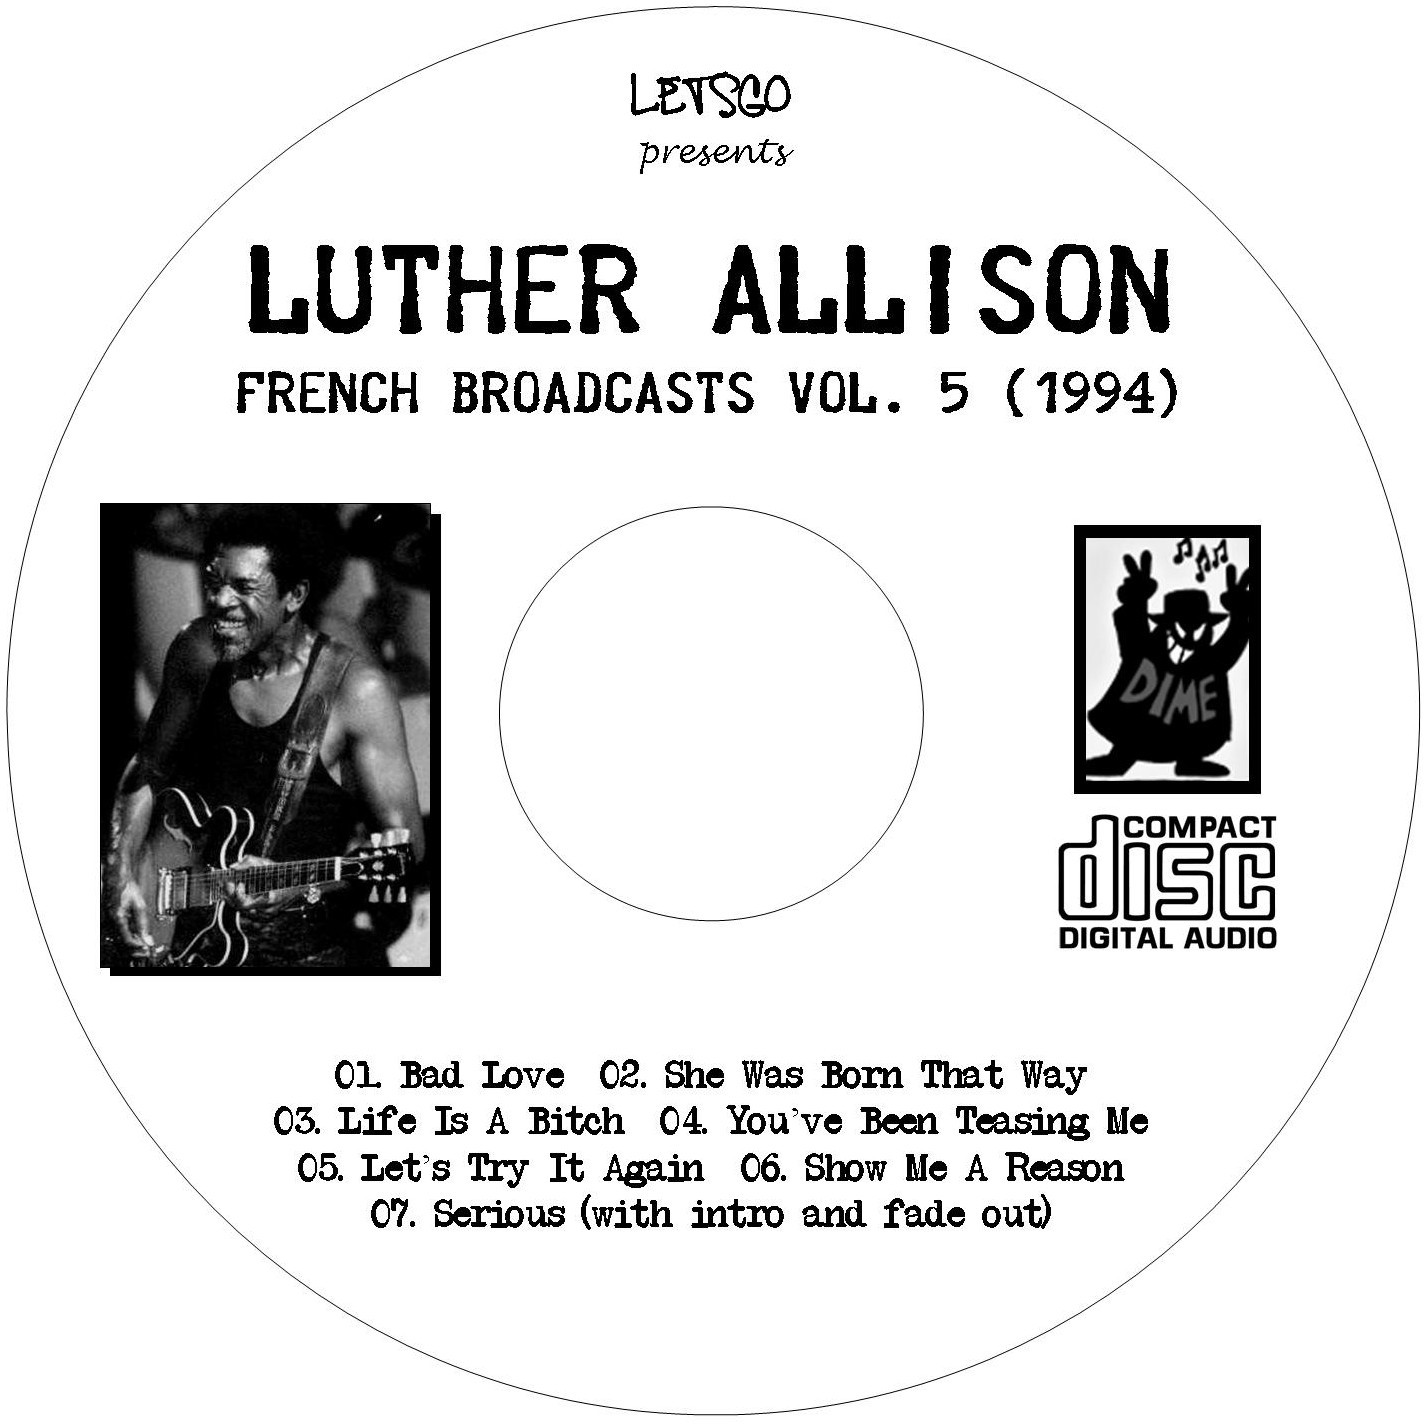 LutherAllison1987-1994FrenchBroadcastsVol5 (1).jpg